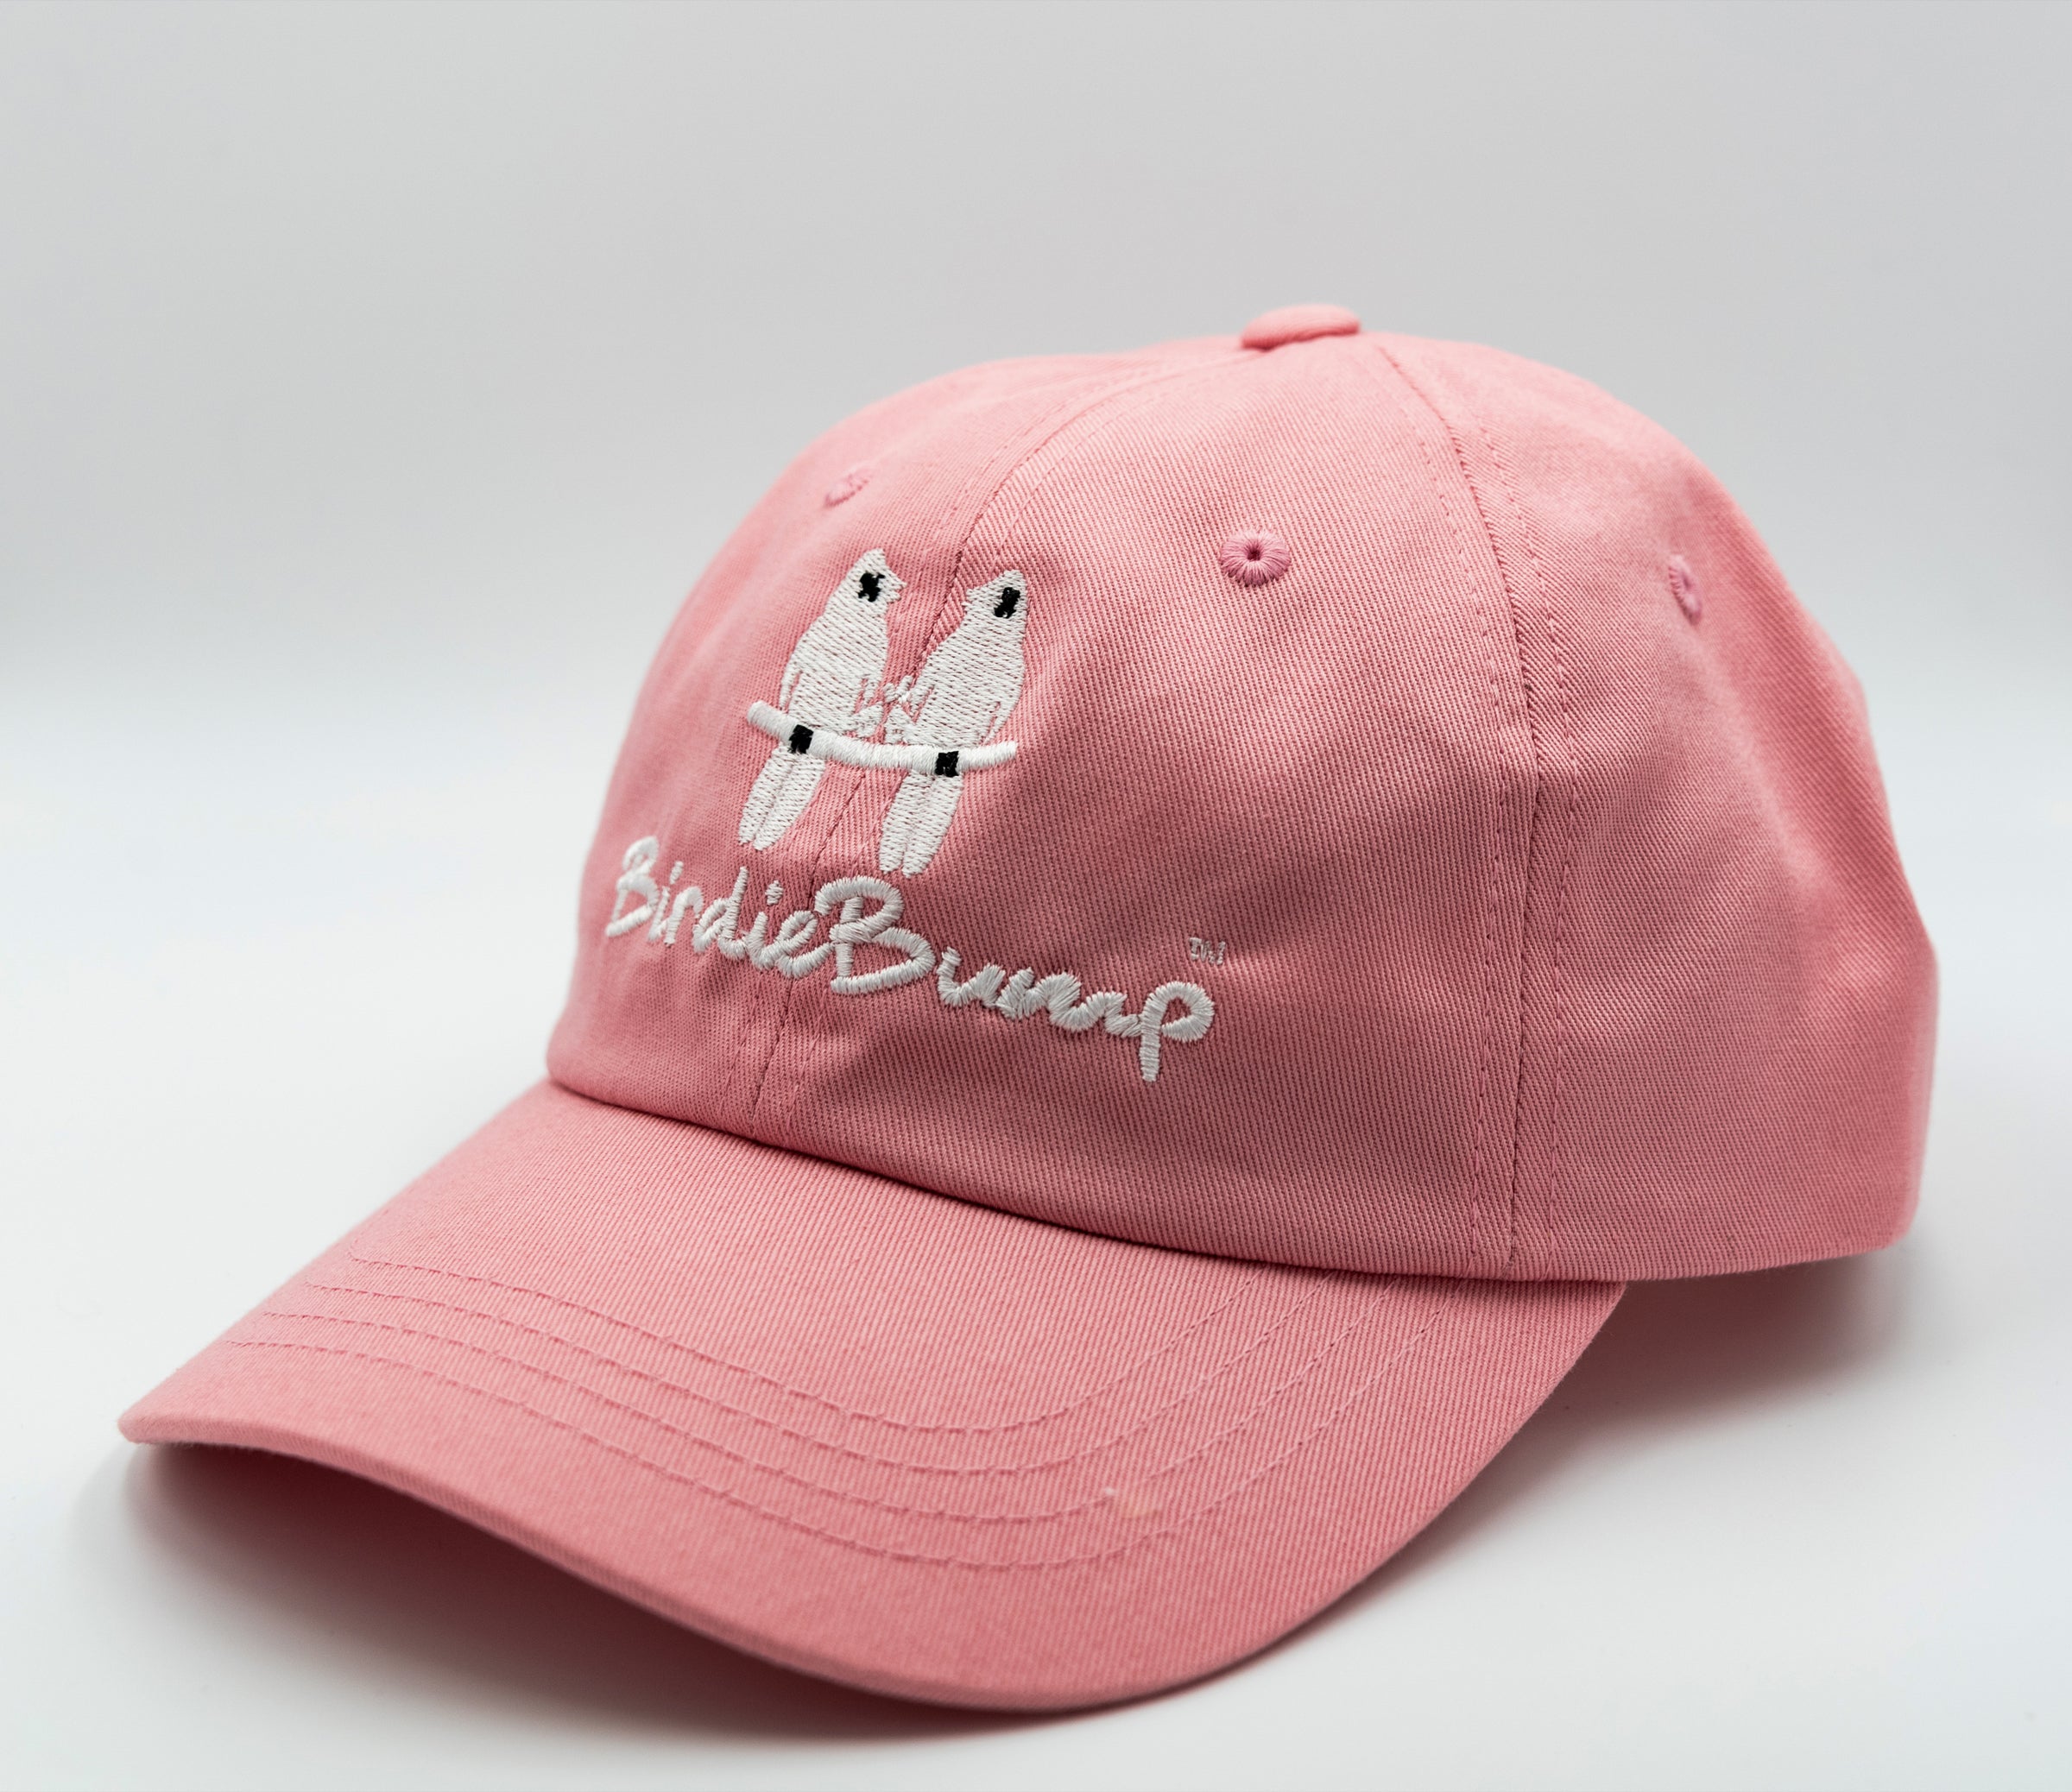 Birdie Bump Pink on Pink Dad Hat White Logo